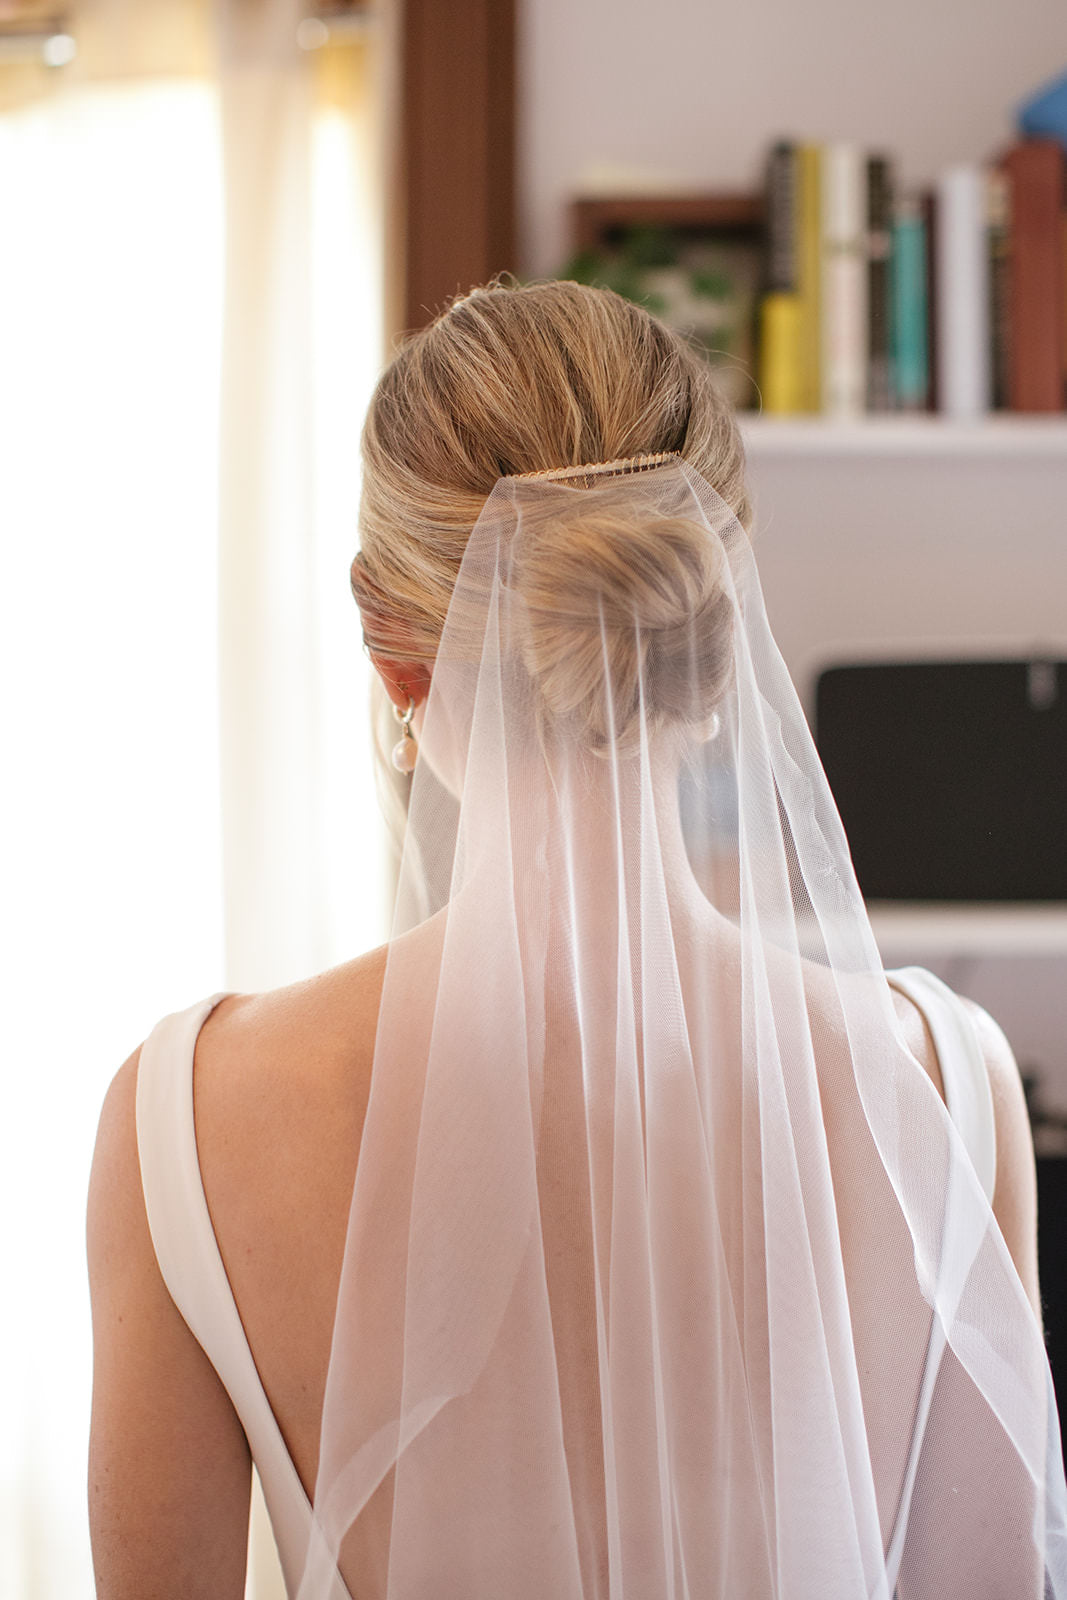 White Single Layer Wedding Veil